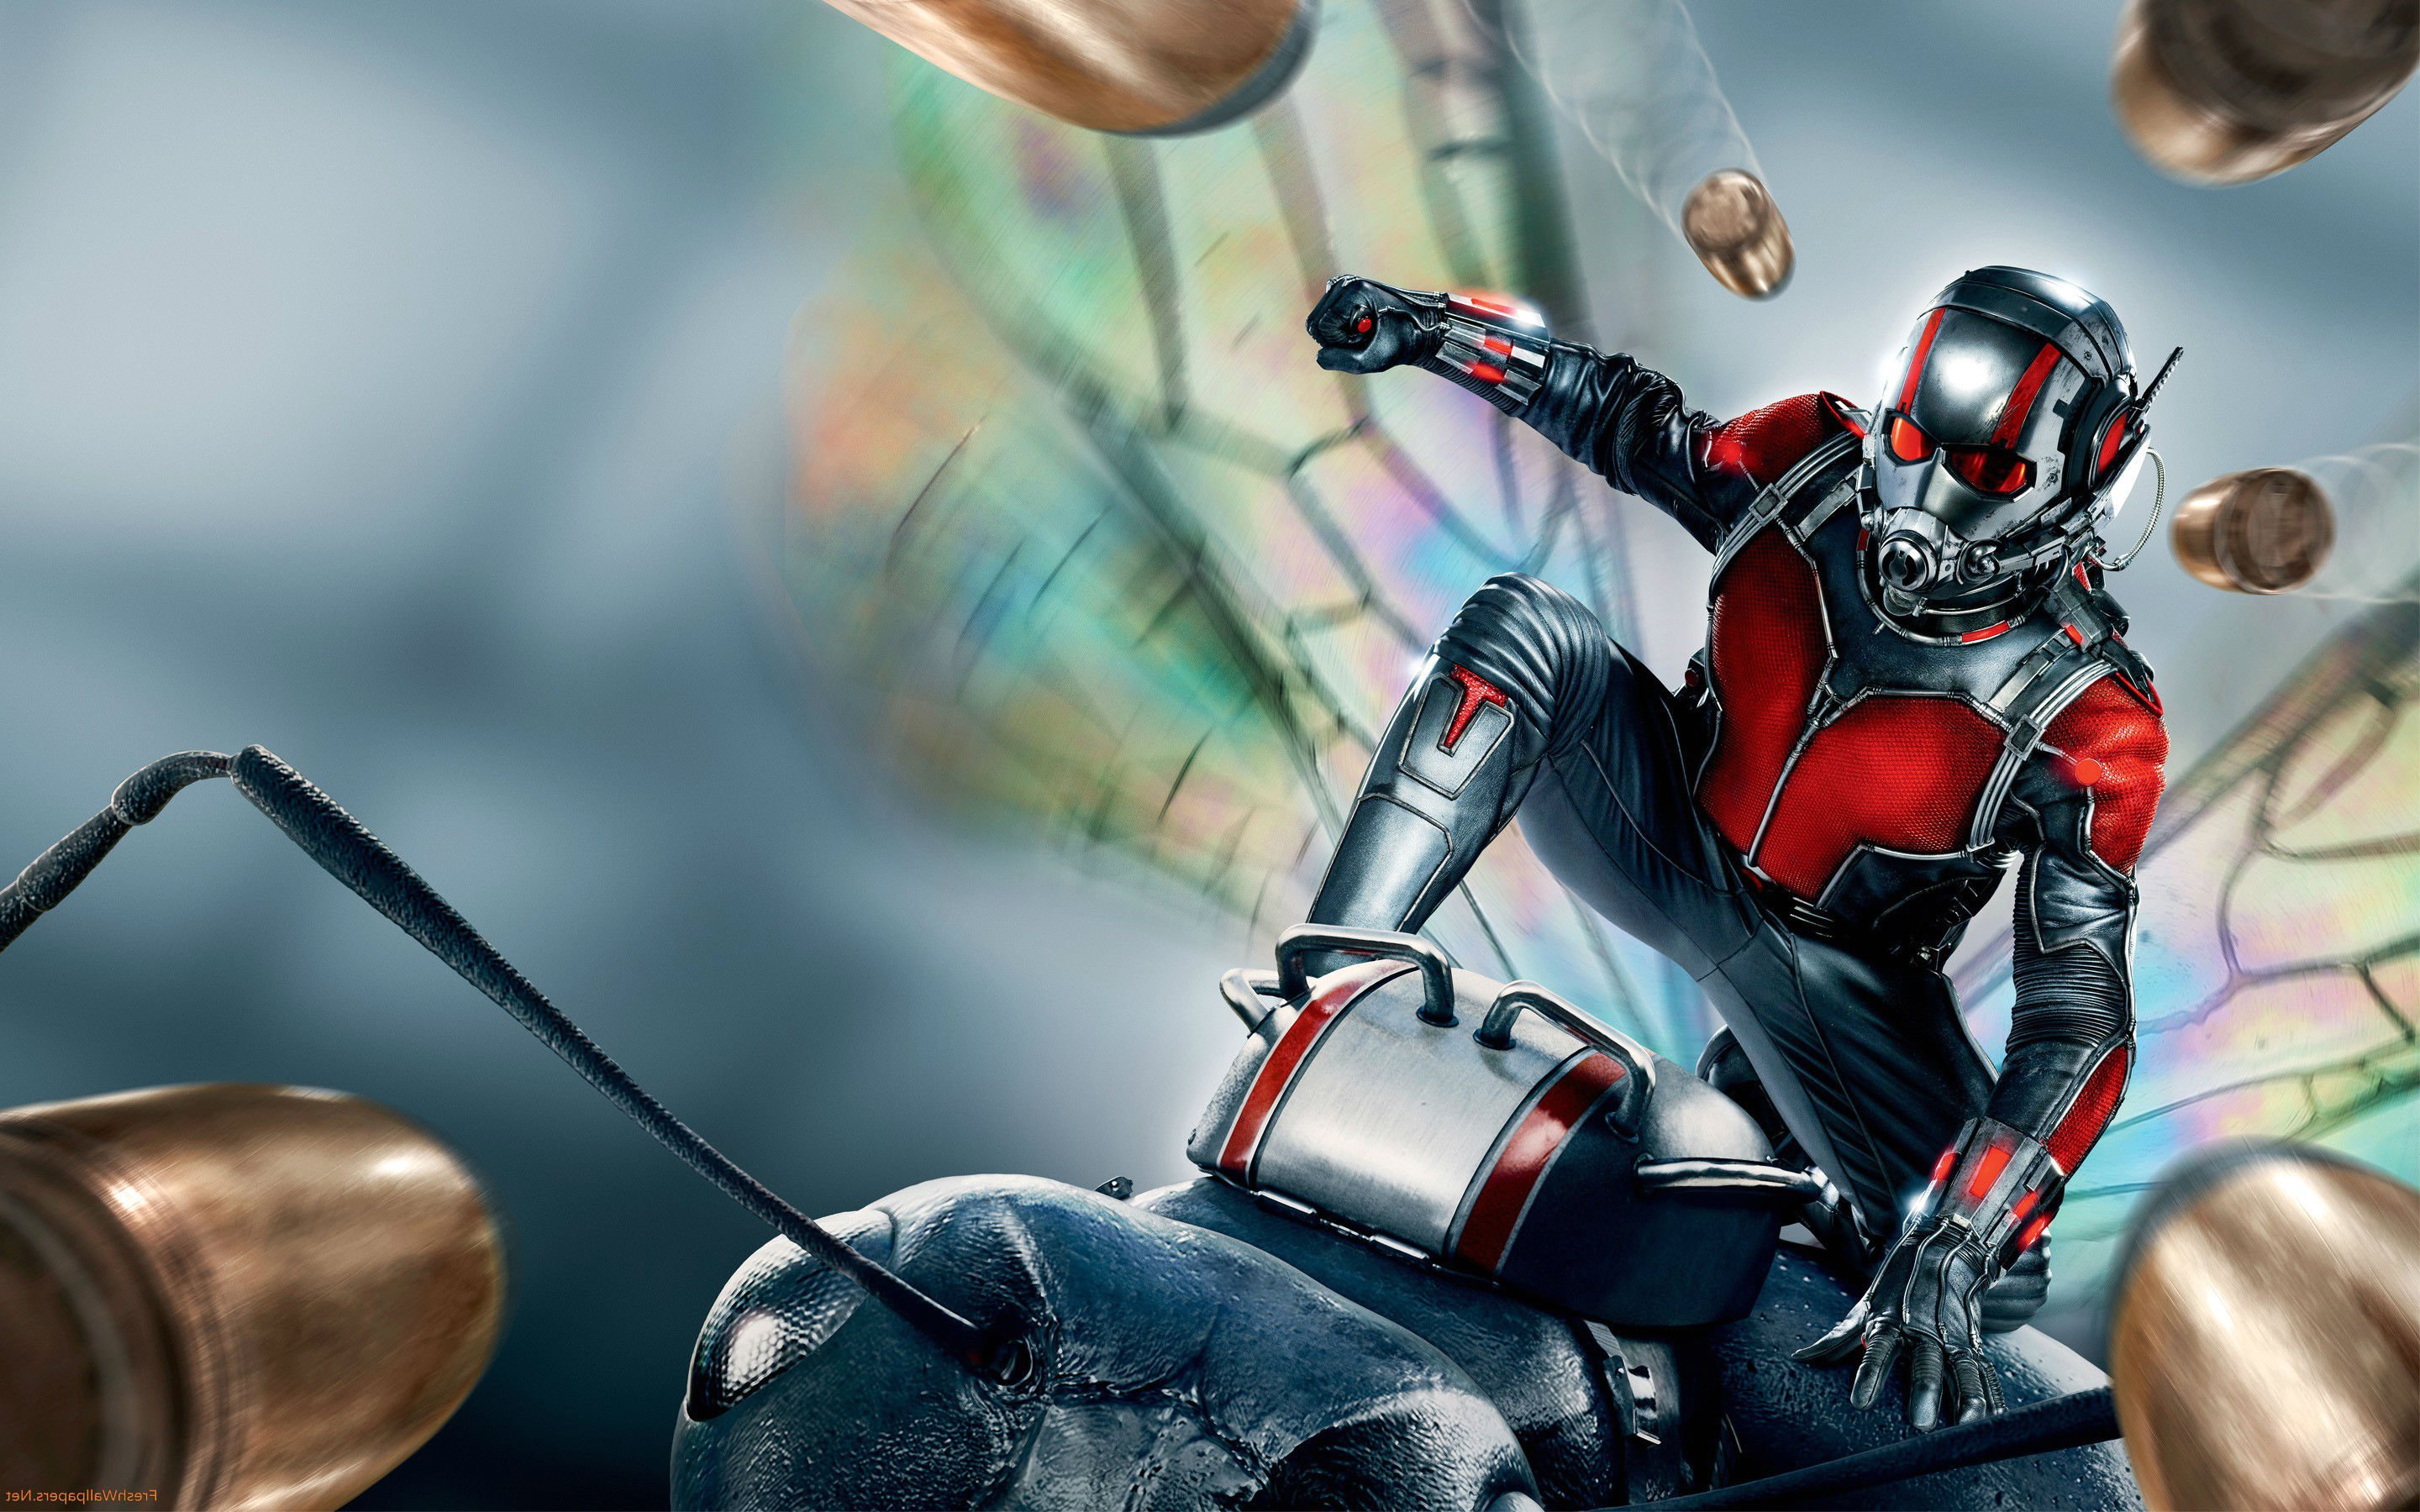  marvel comics disney hero 1antman warrior ant man wallpaper background